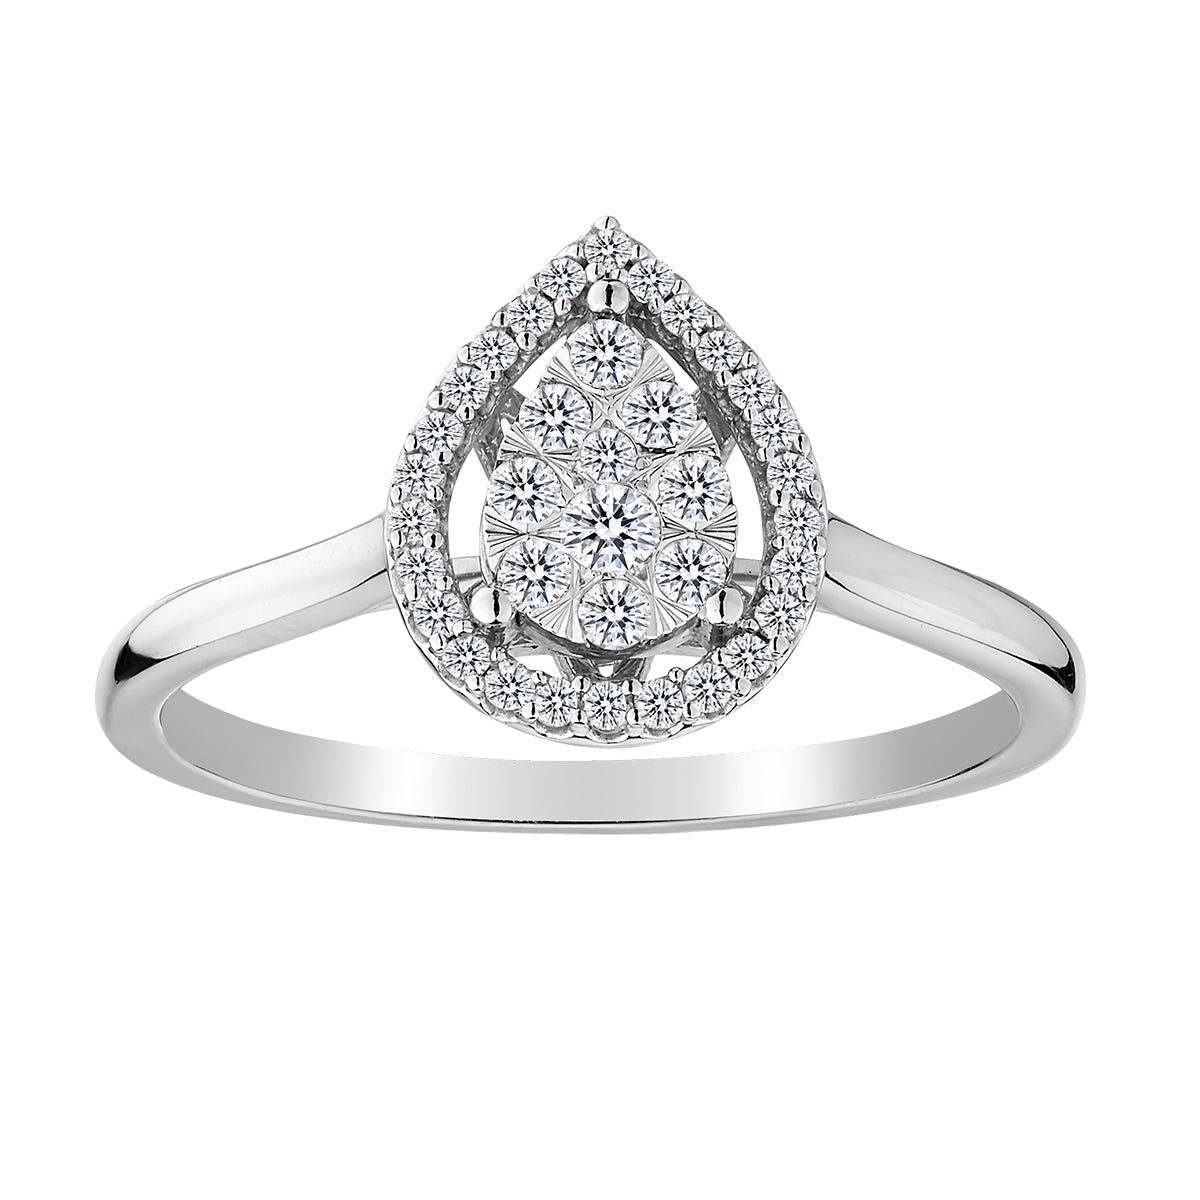 .25 Carat Pear Shape Diamond Ring, 10kt White Gold.......................NOW